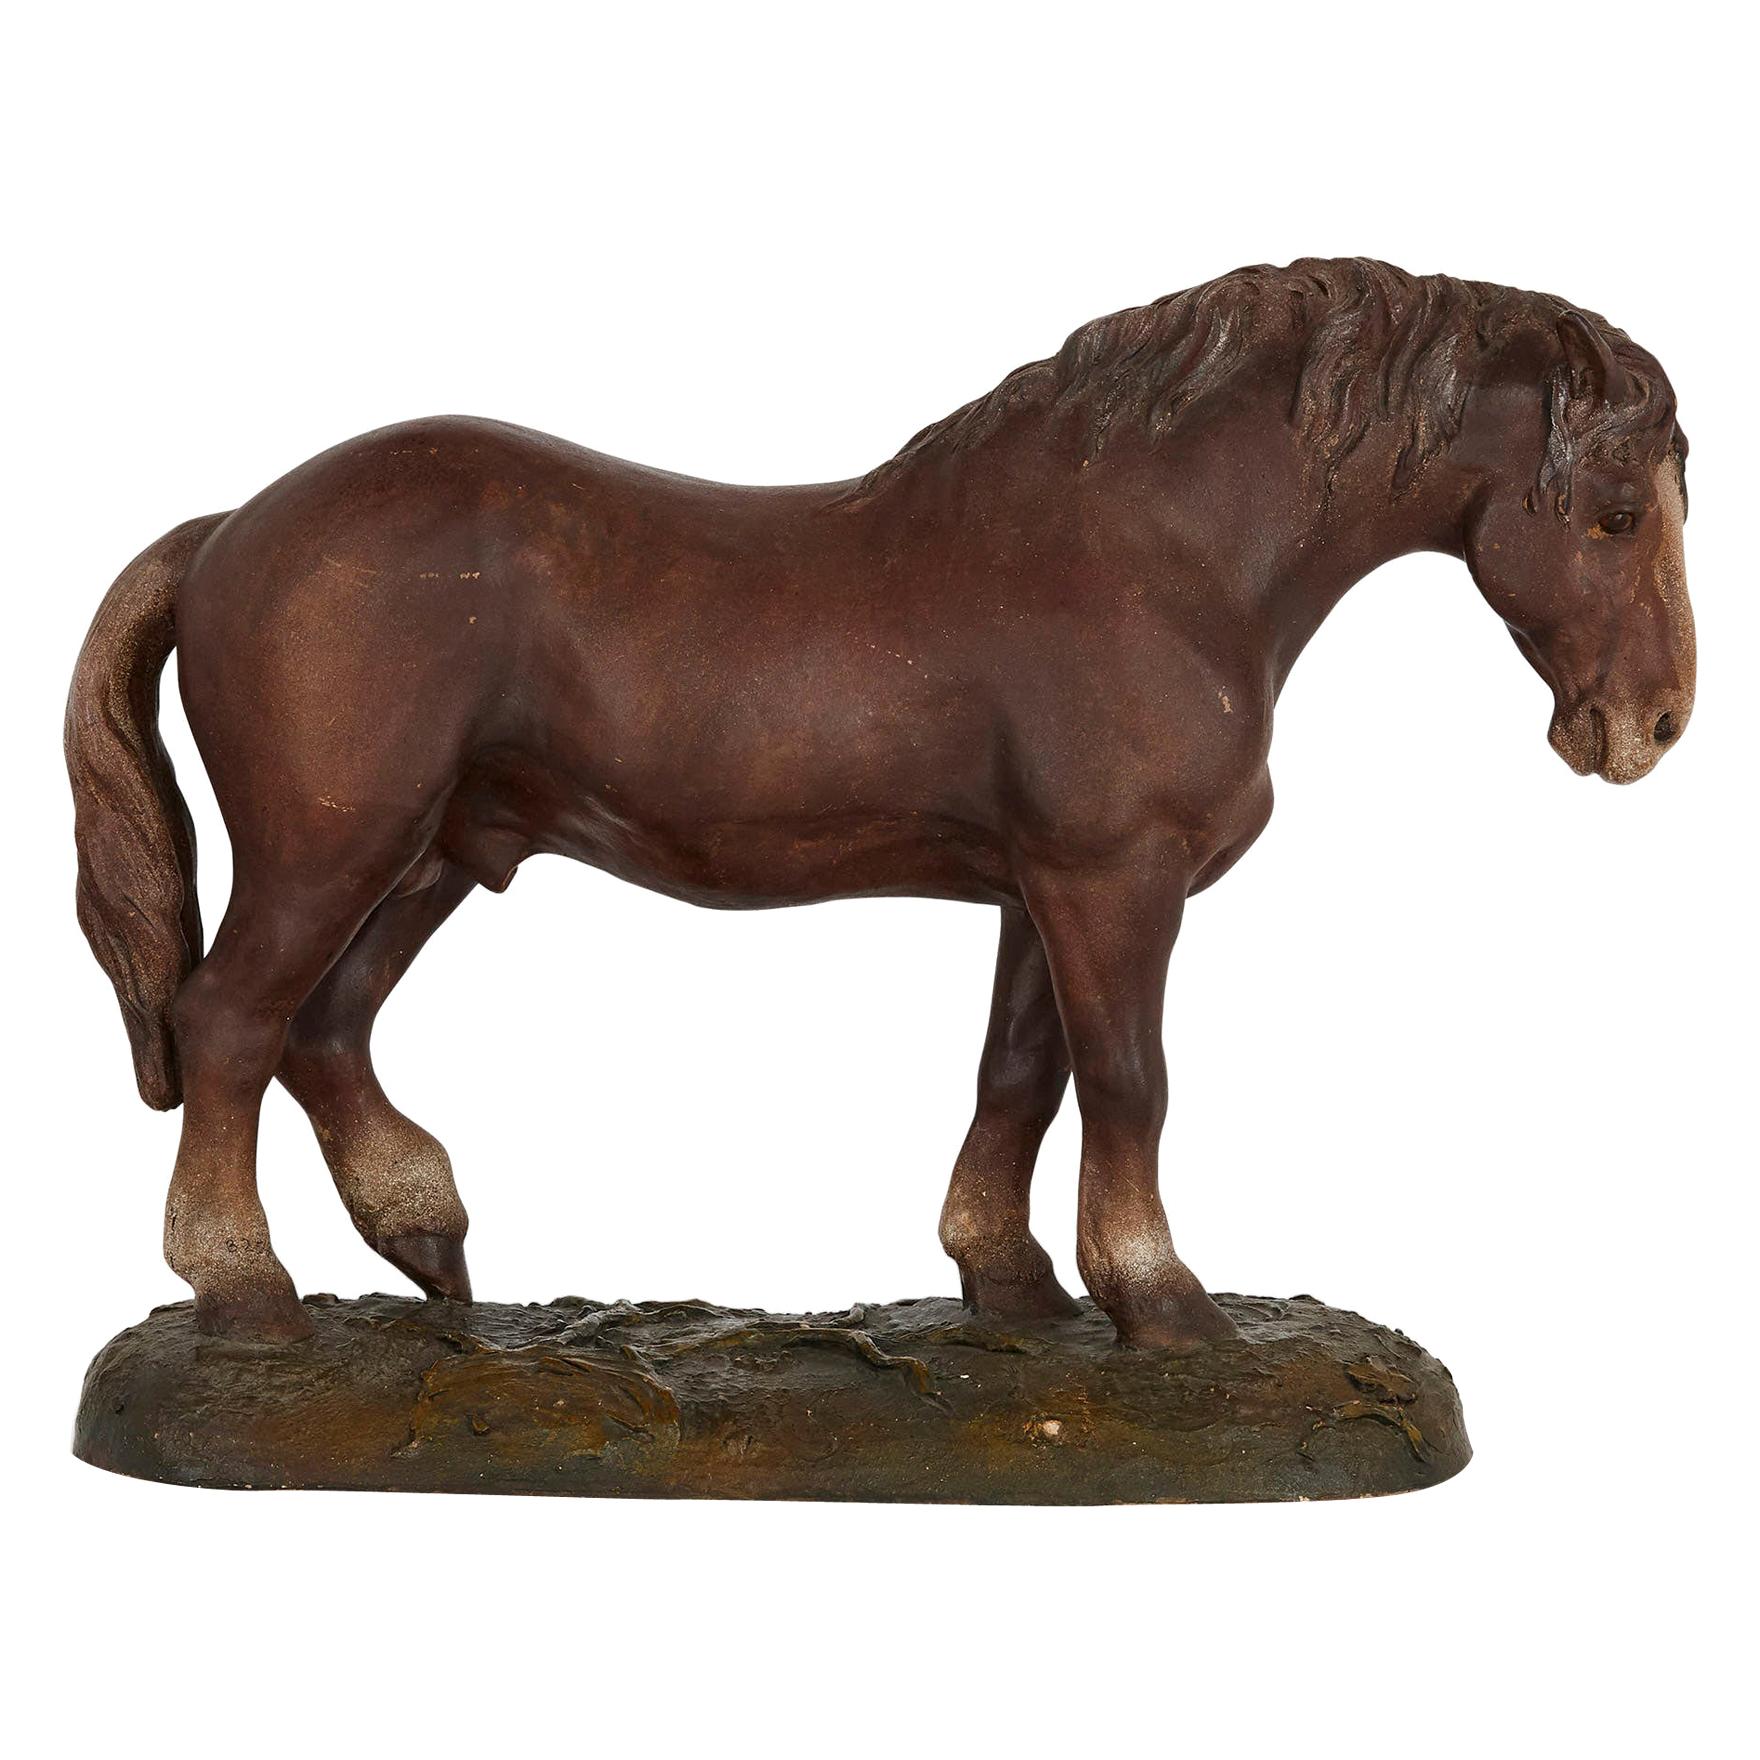 Antique Terracotta Equestrian Model of a Horse